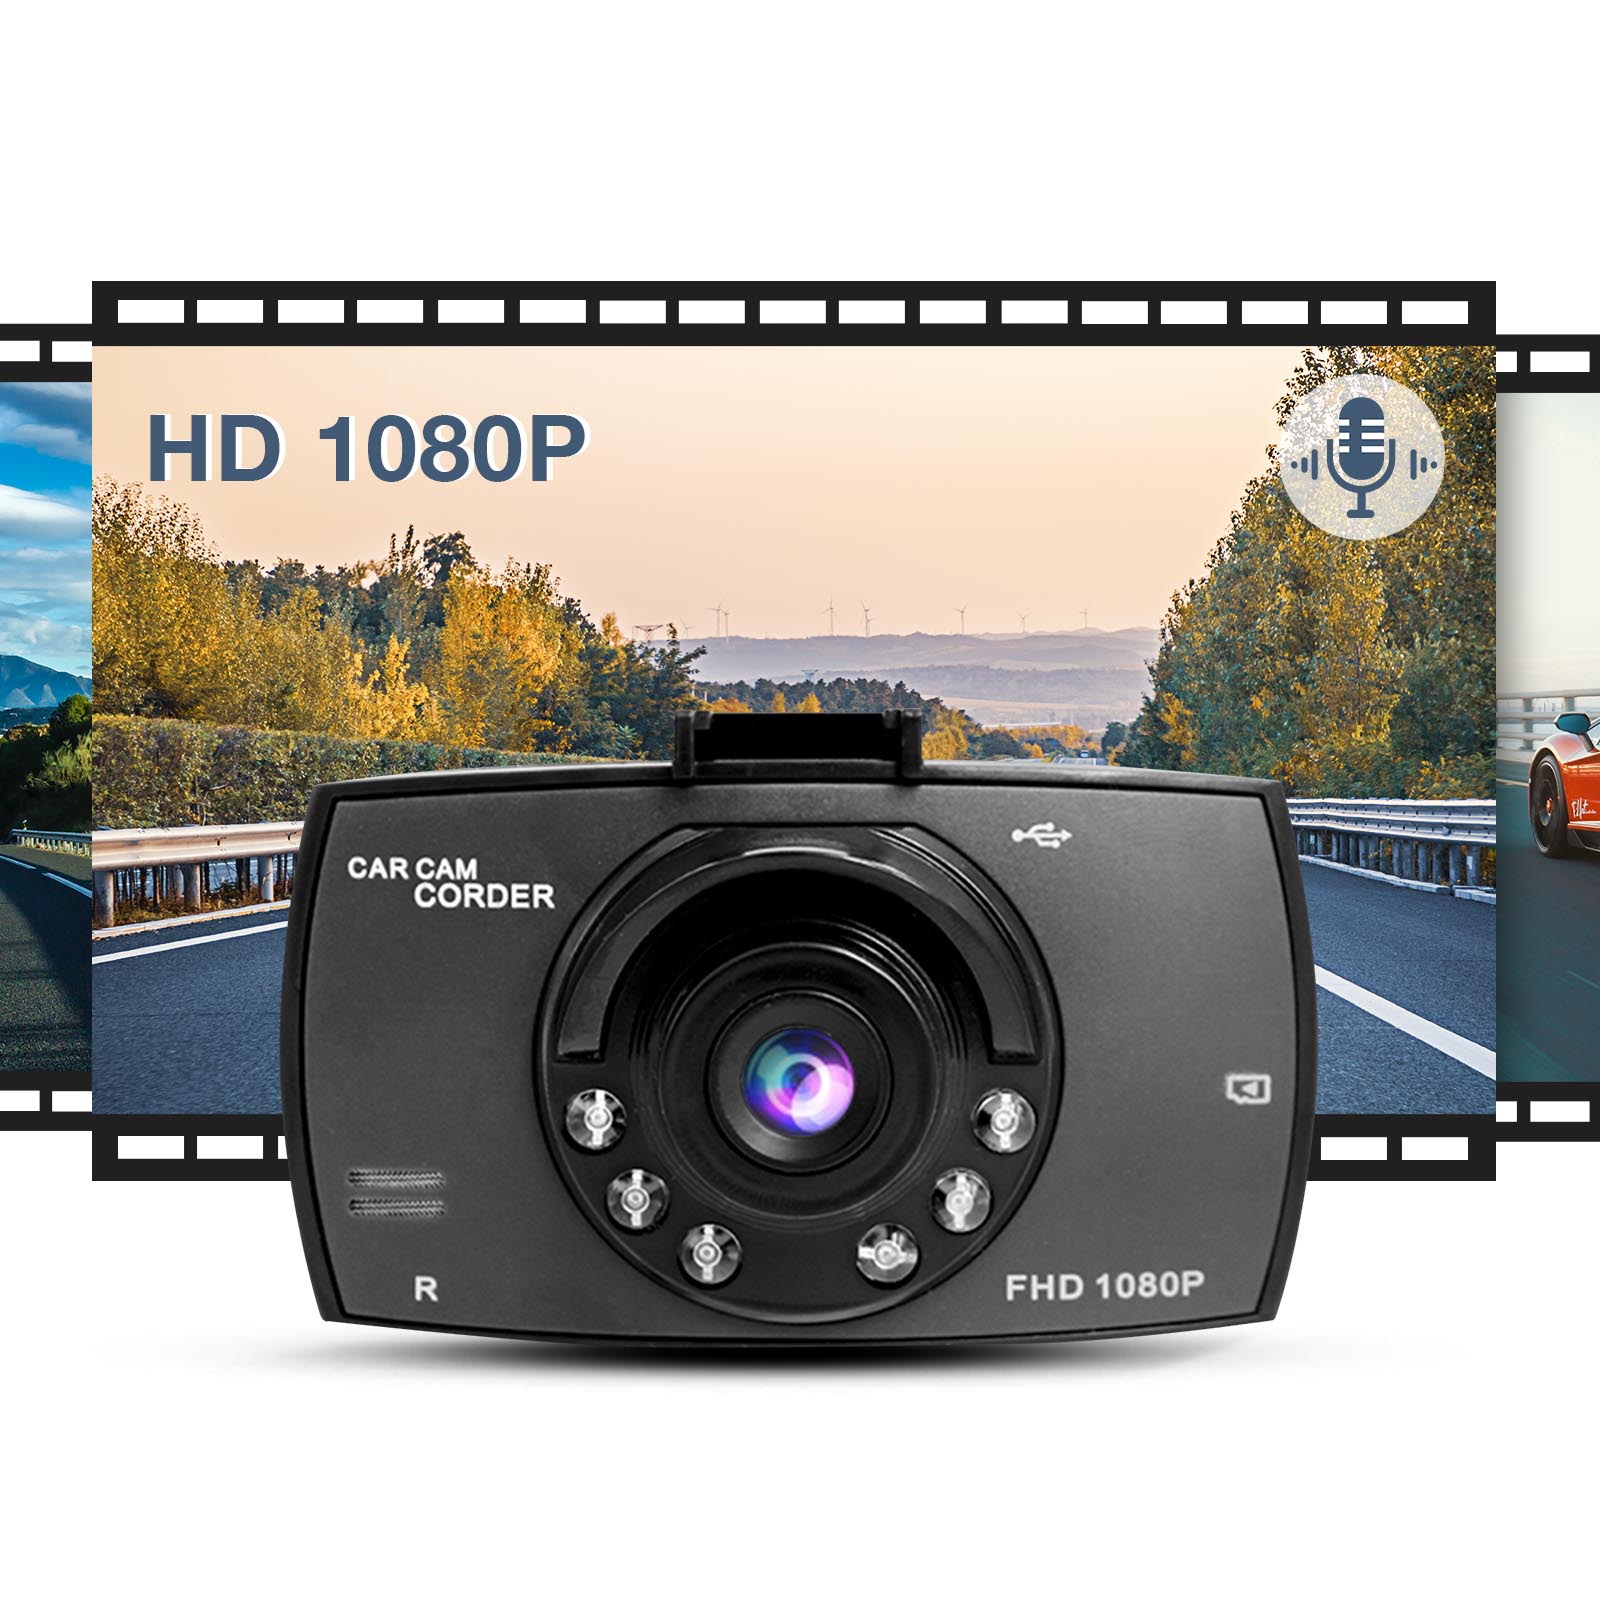 Caméra Embarquée Full HD 1080p Caméra Voiture avec Micro, Discrète